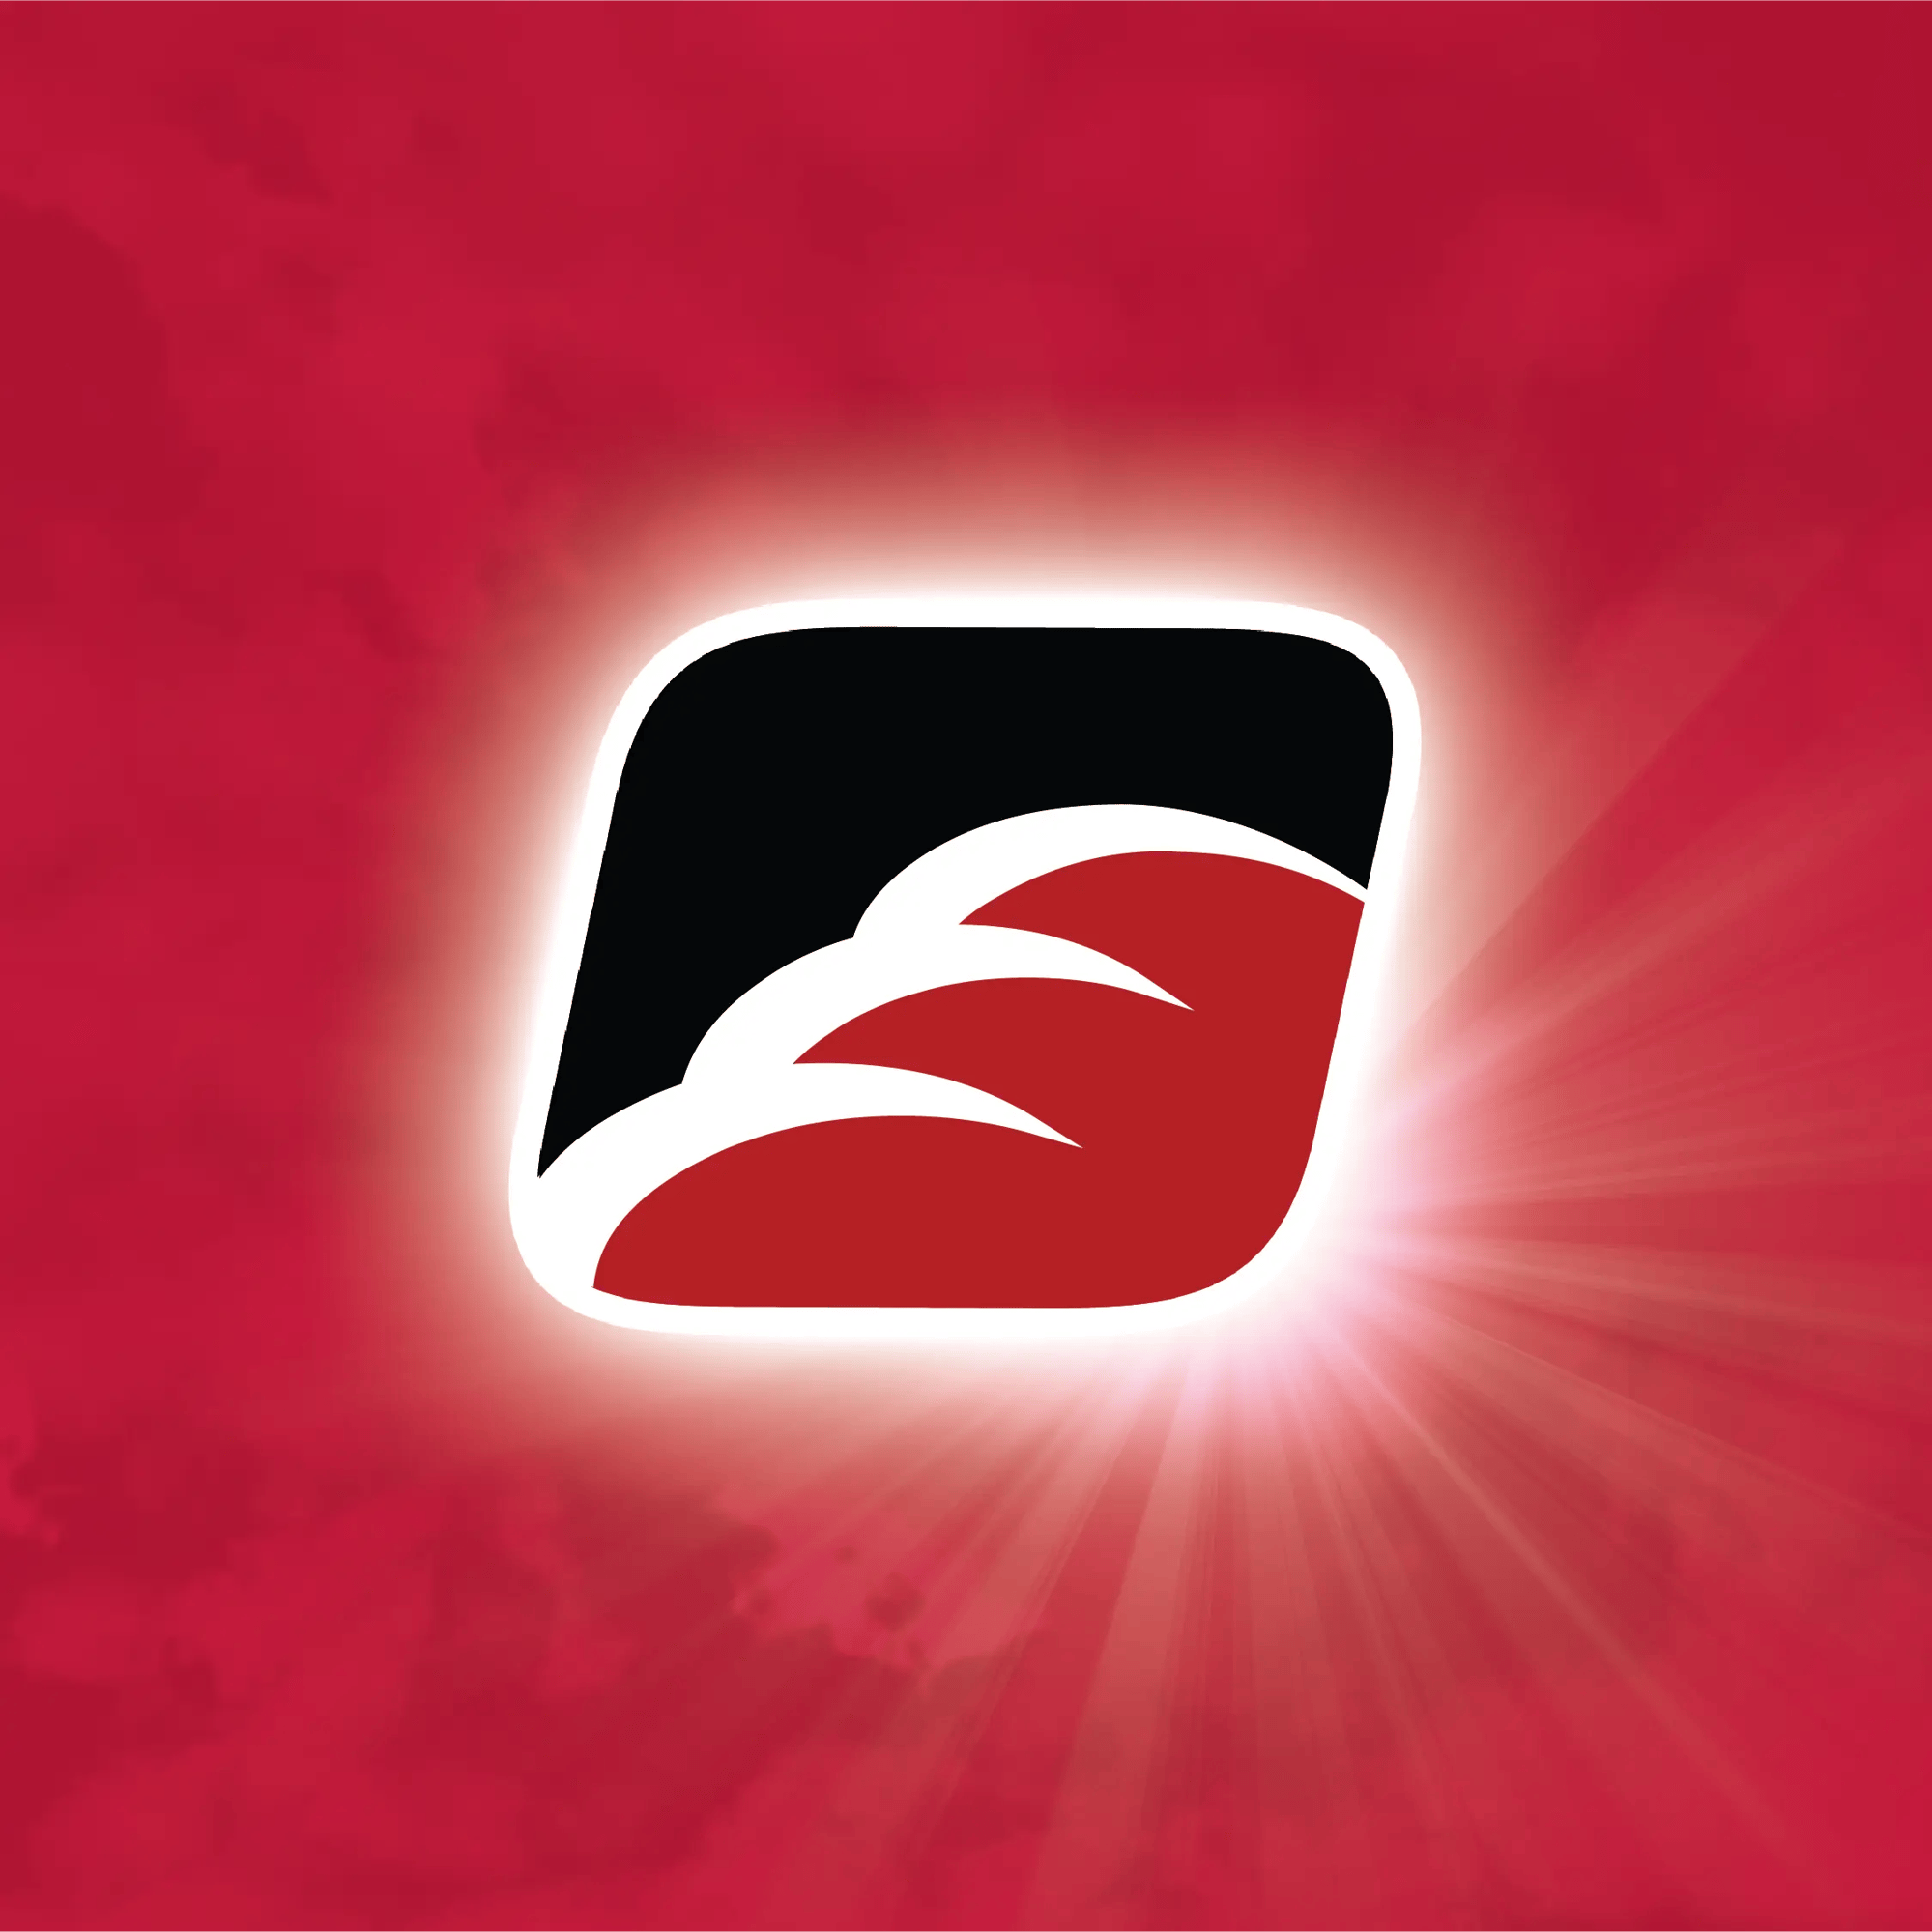 redcloud-logo-icon-teaser